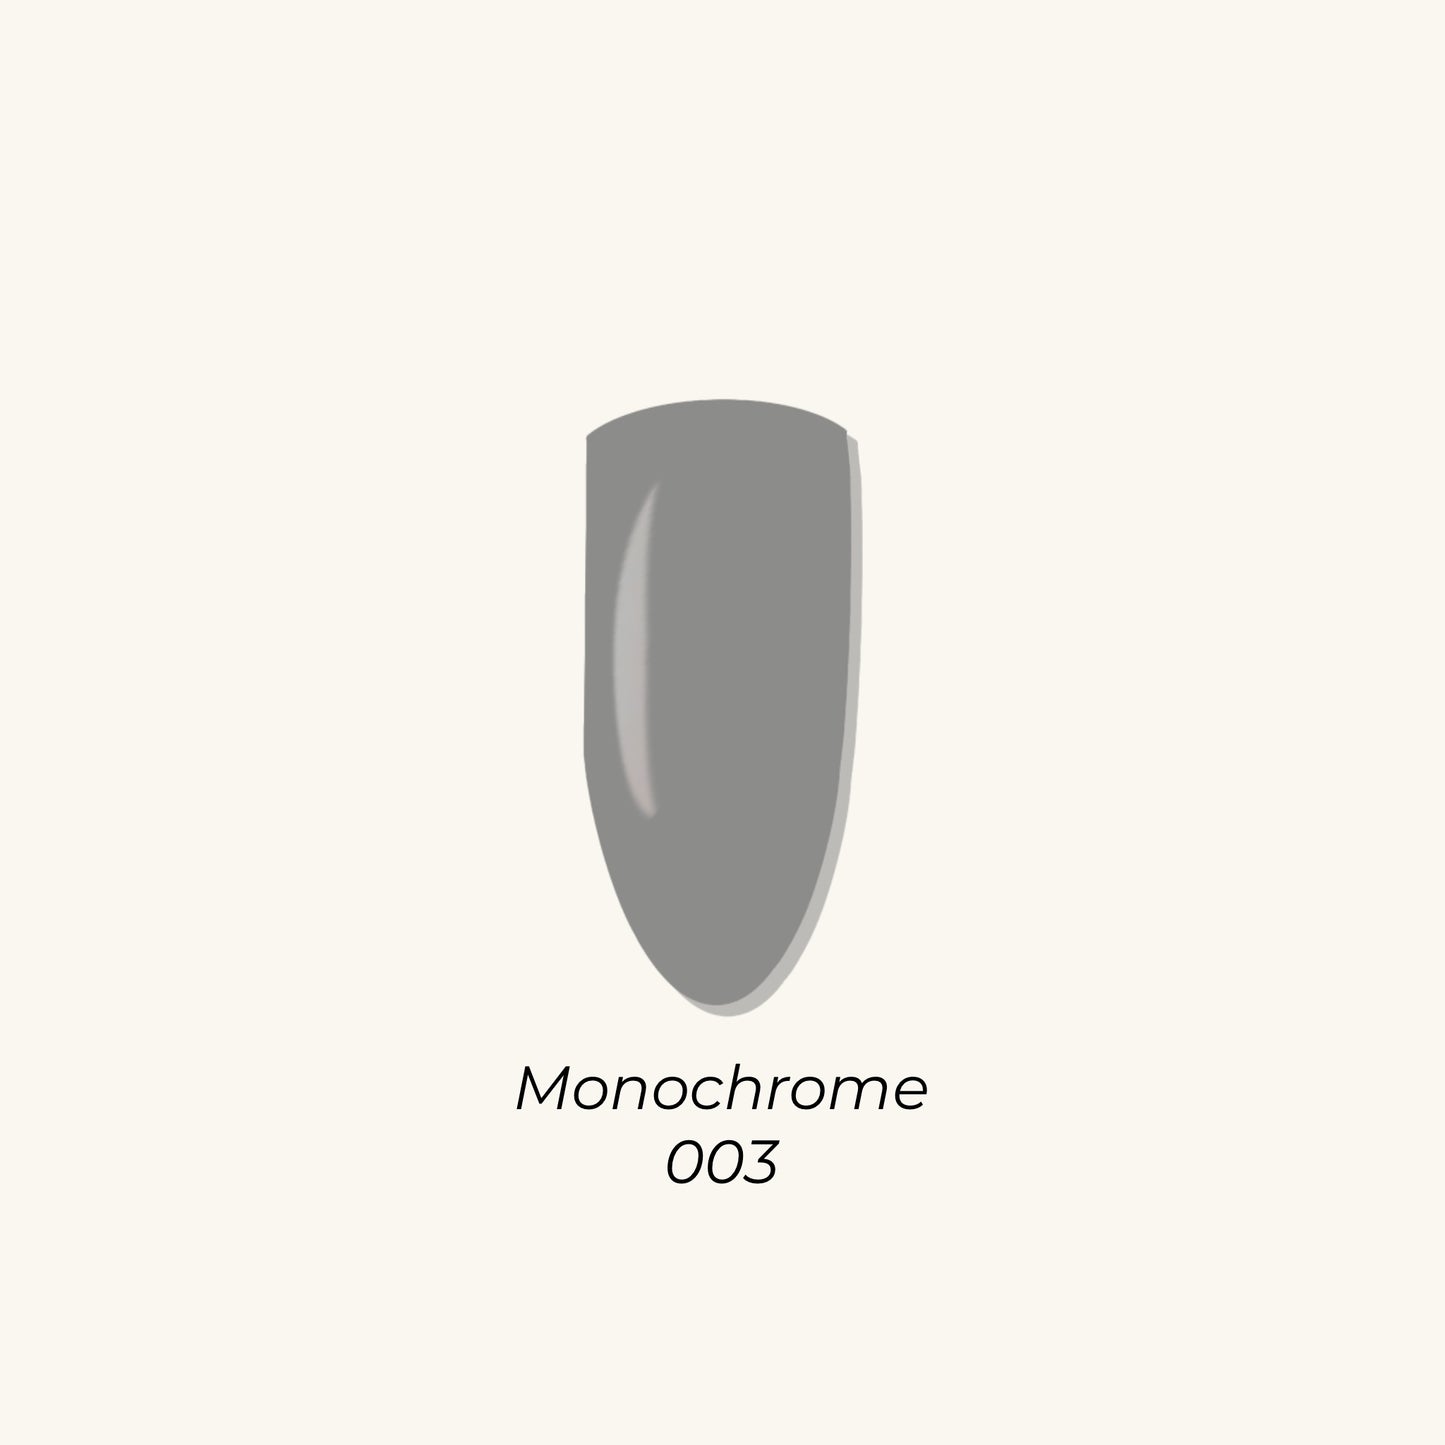 Monochrome 003